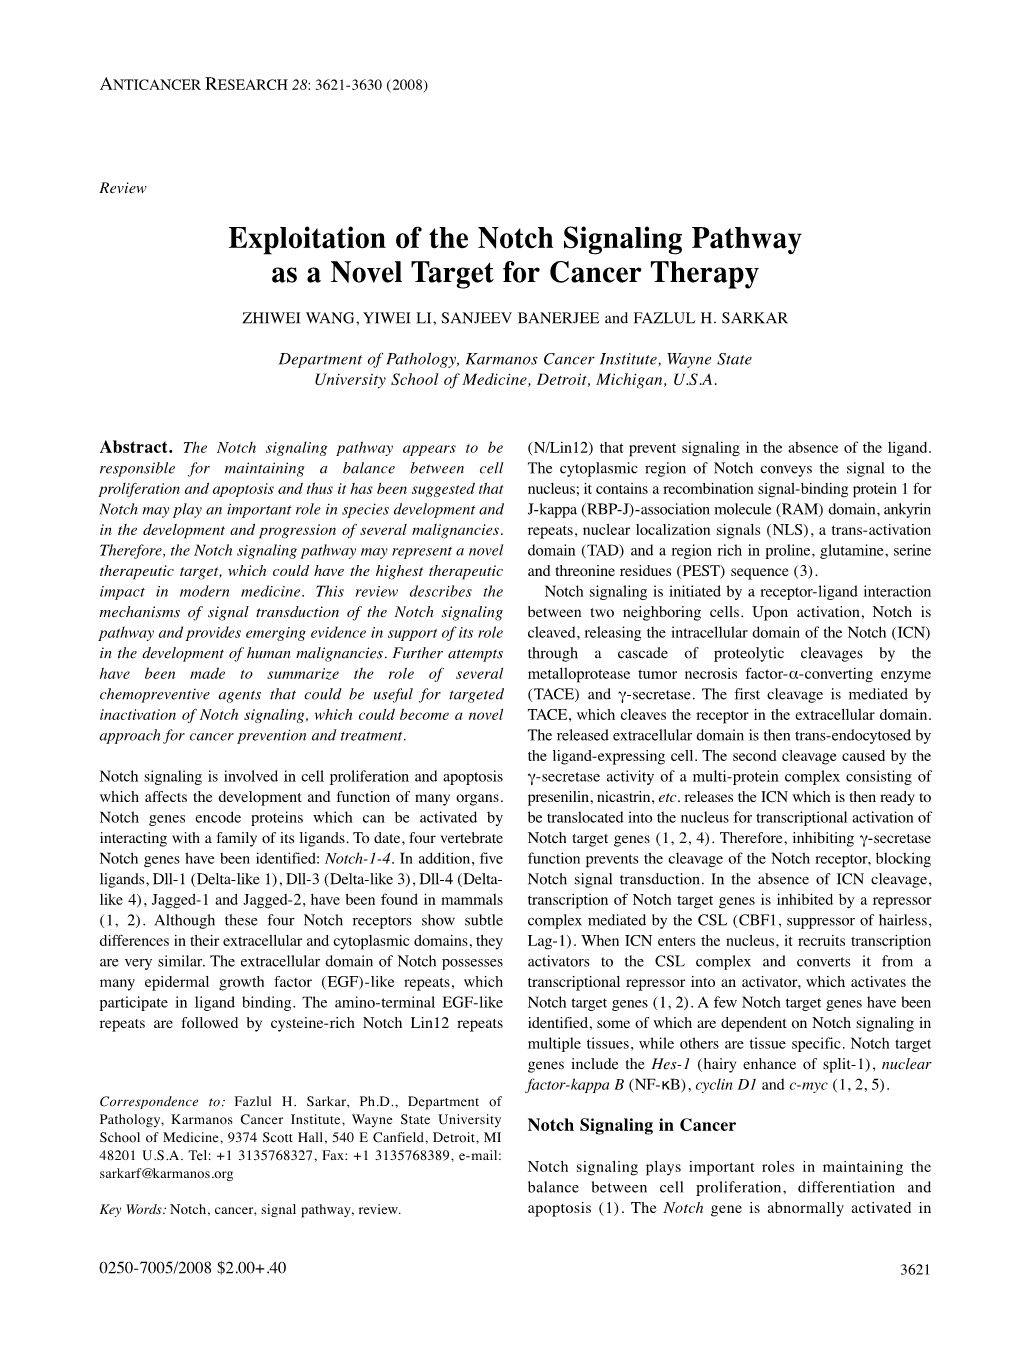 Exploitation of the Notch Signaling Pathway As a Novel Target for Cancer Therapy ZHIWEI WANG, YIWEI LI, SANJEEV BANERJEE and FAZLUL H